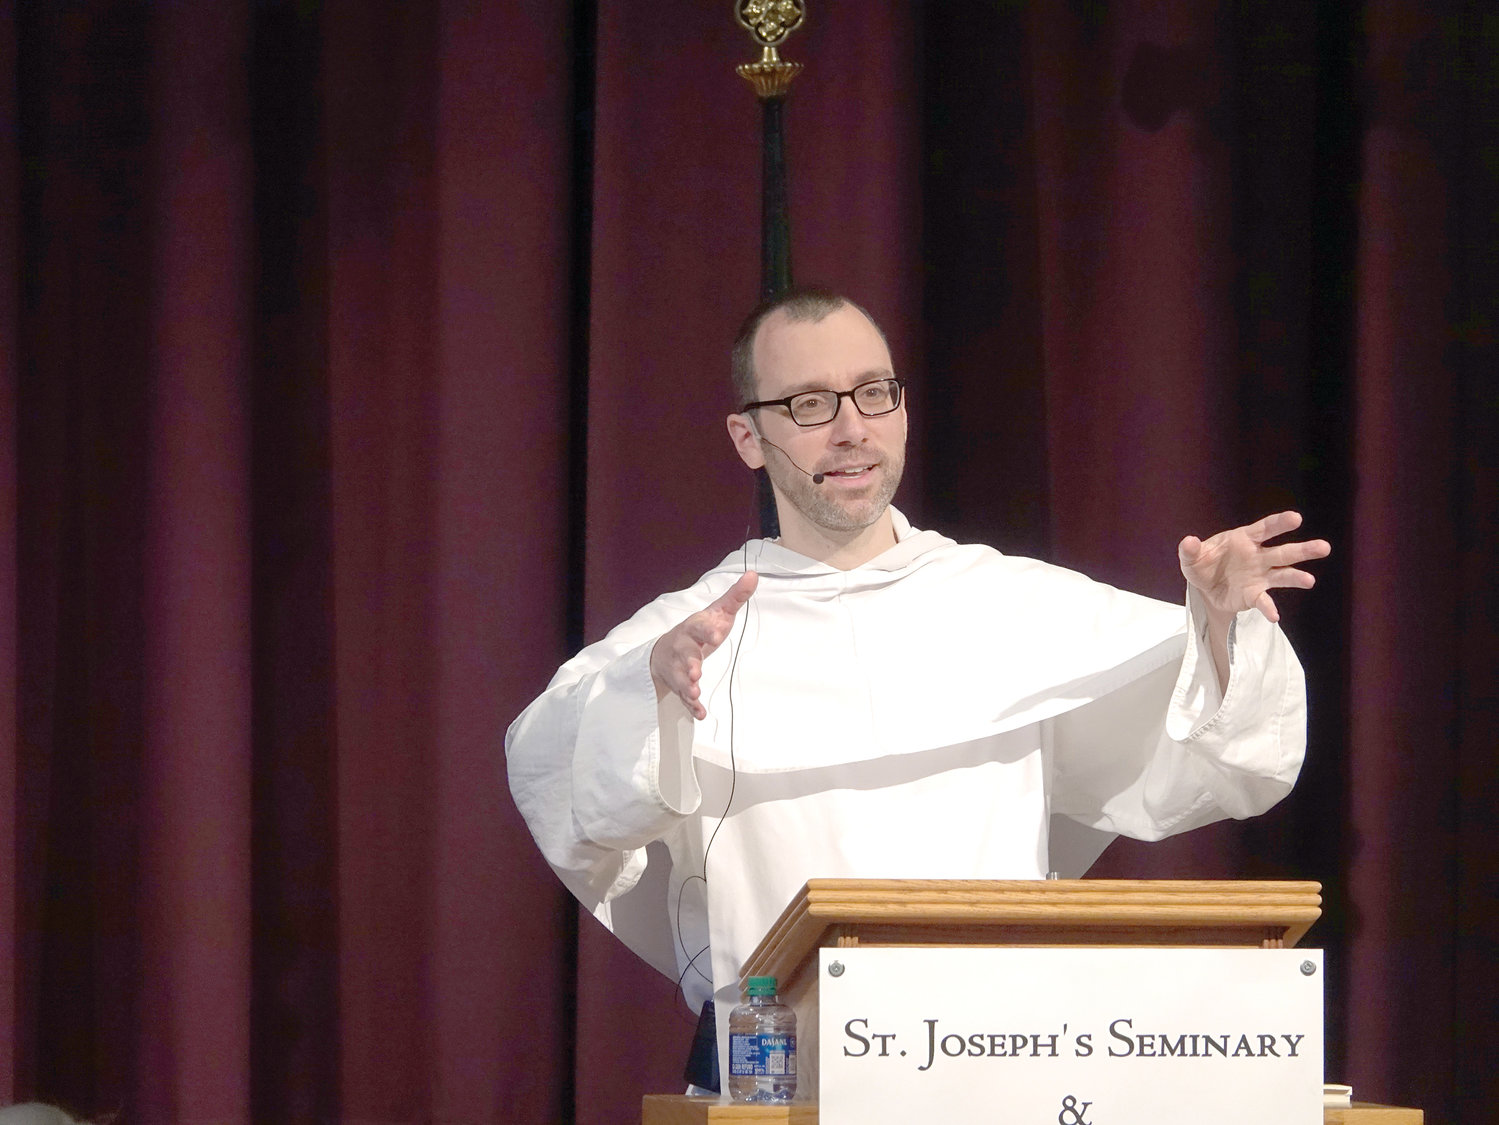 Father Sebastian White, O.P., editor in chief of Magnificat magazine, leads the main presentation.